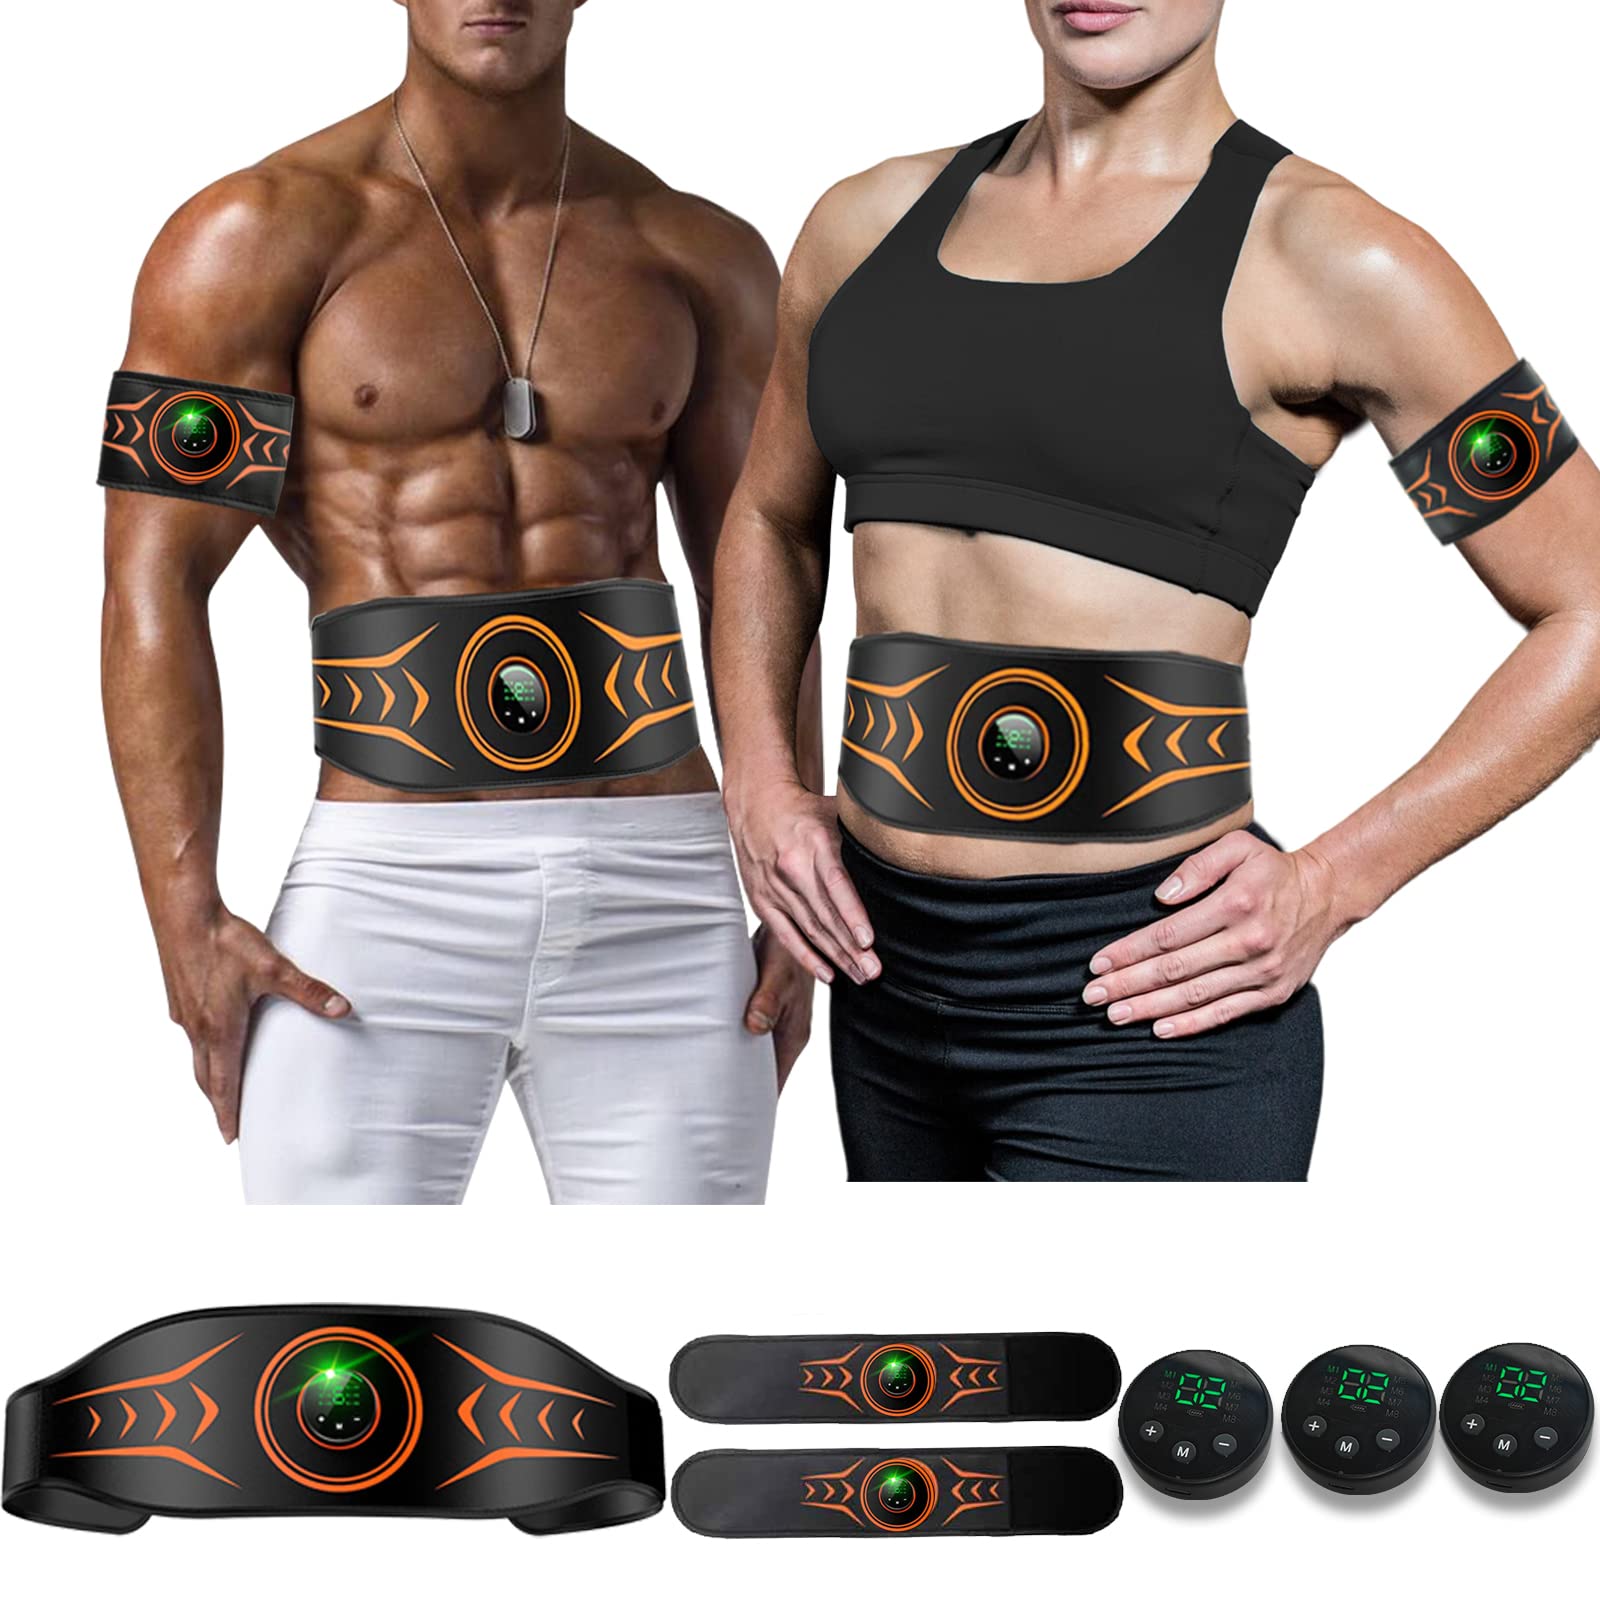 HAUBAT Heating Abs Toning Belt, Muscle Toner, Abdominal Training Belt  Workout Portable Fitness Equipment for Home 37-55(No remot